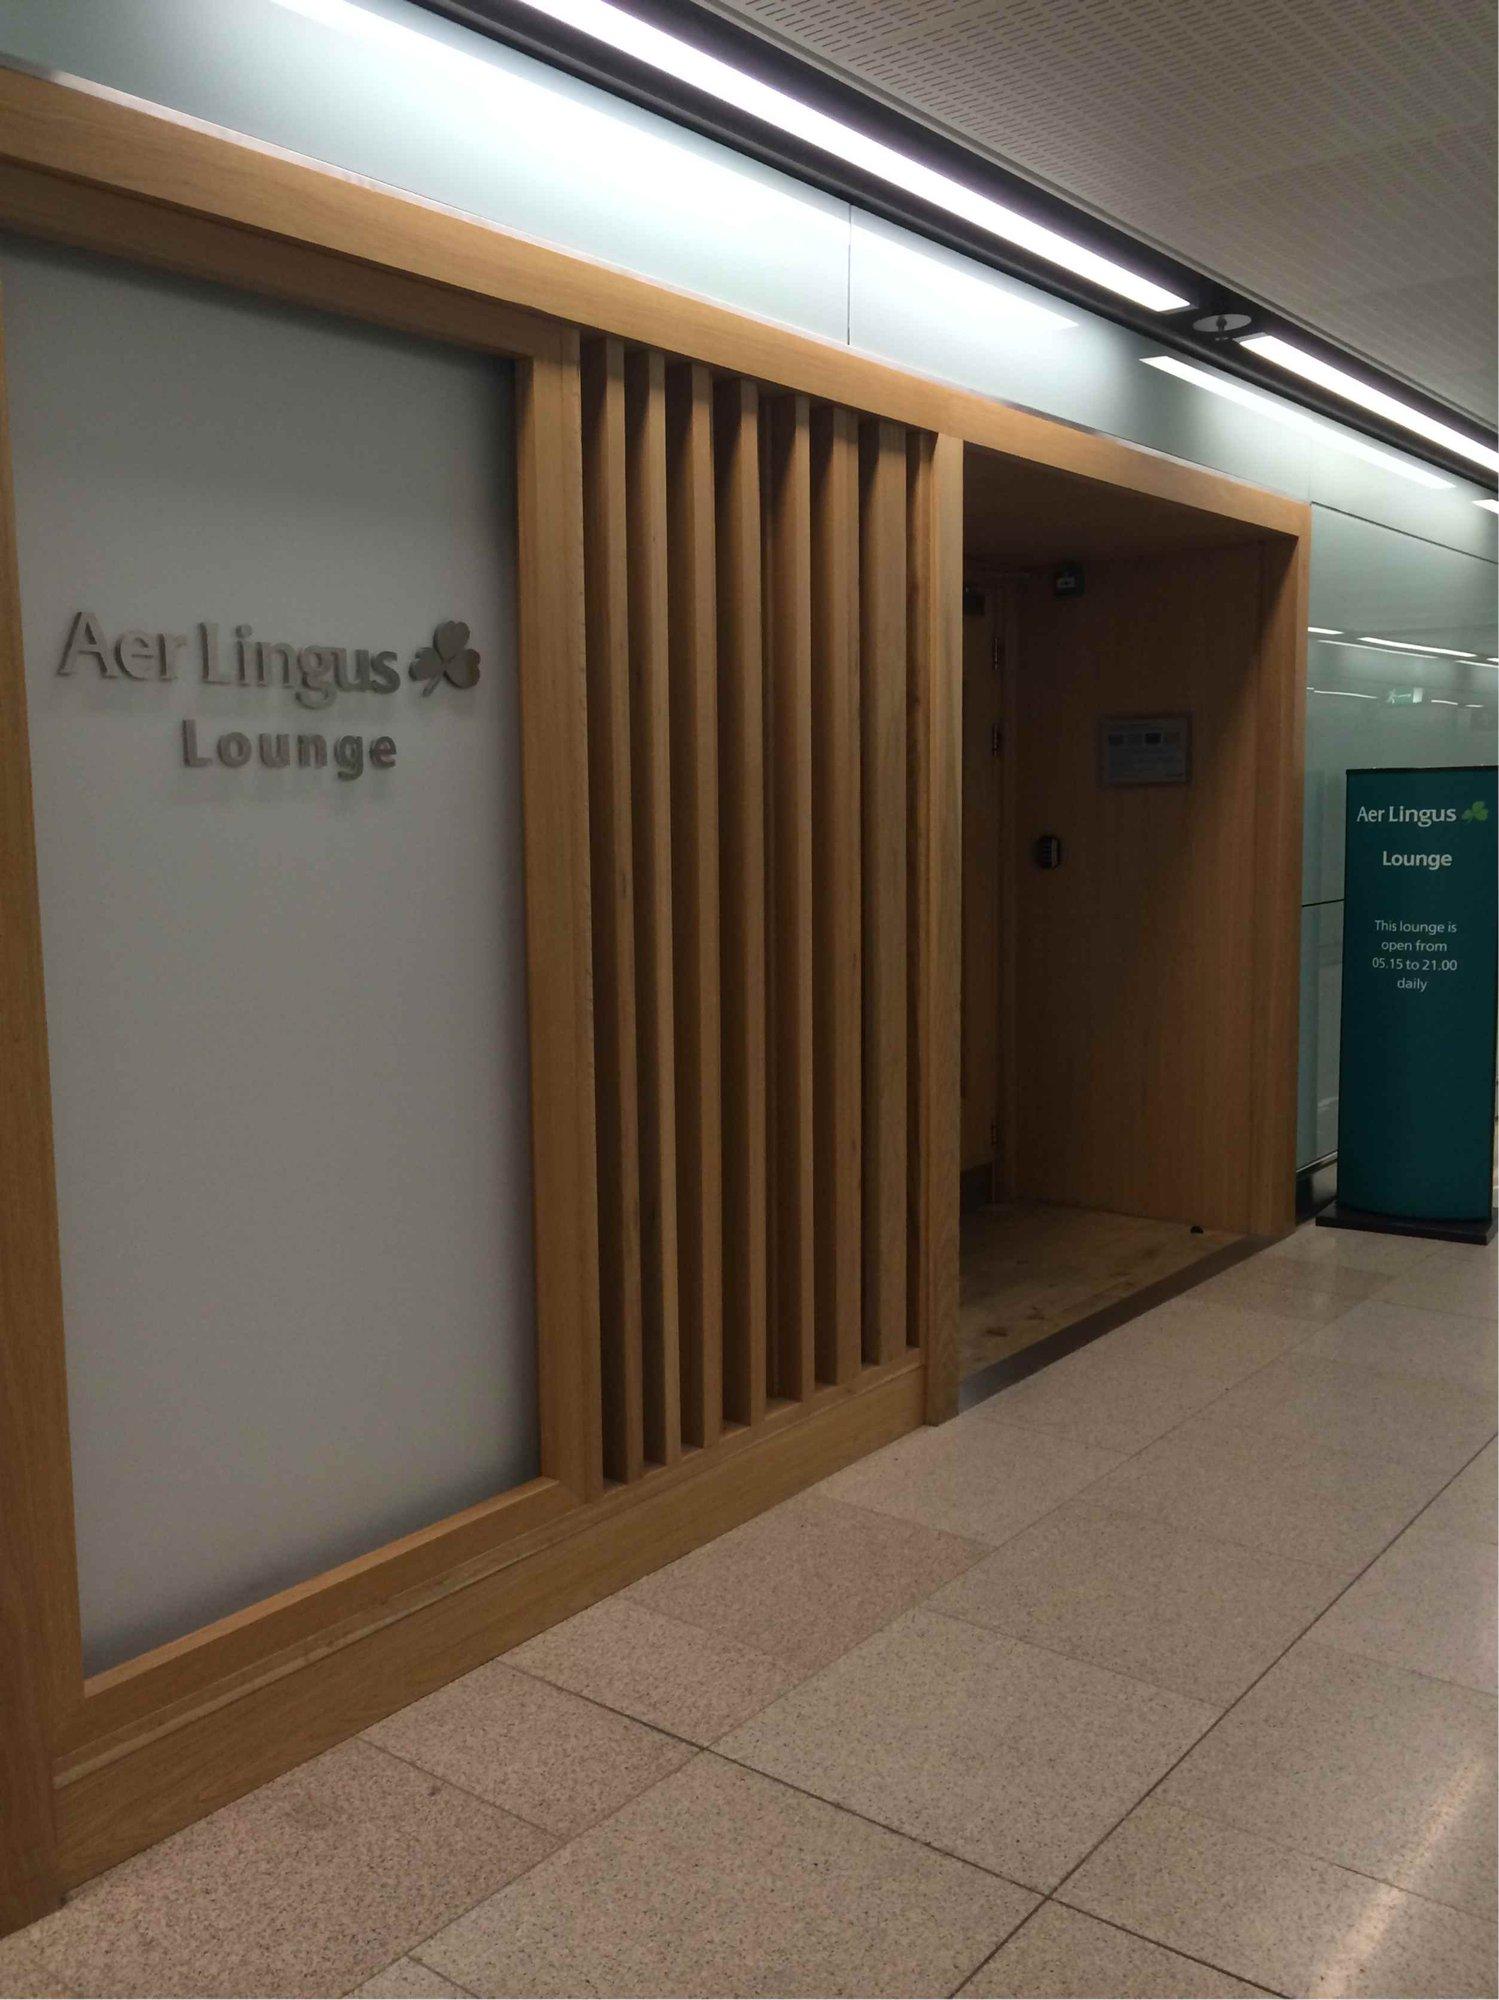 Aer Lingus Lounge image 8 of 10